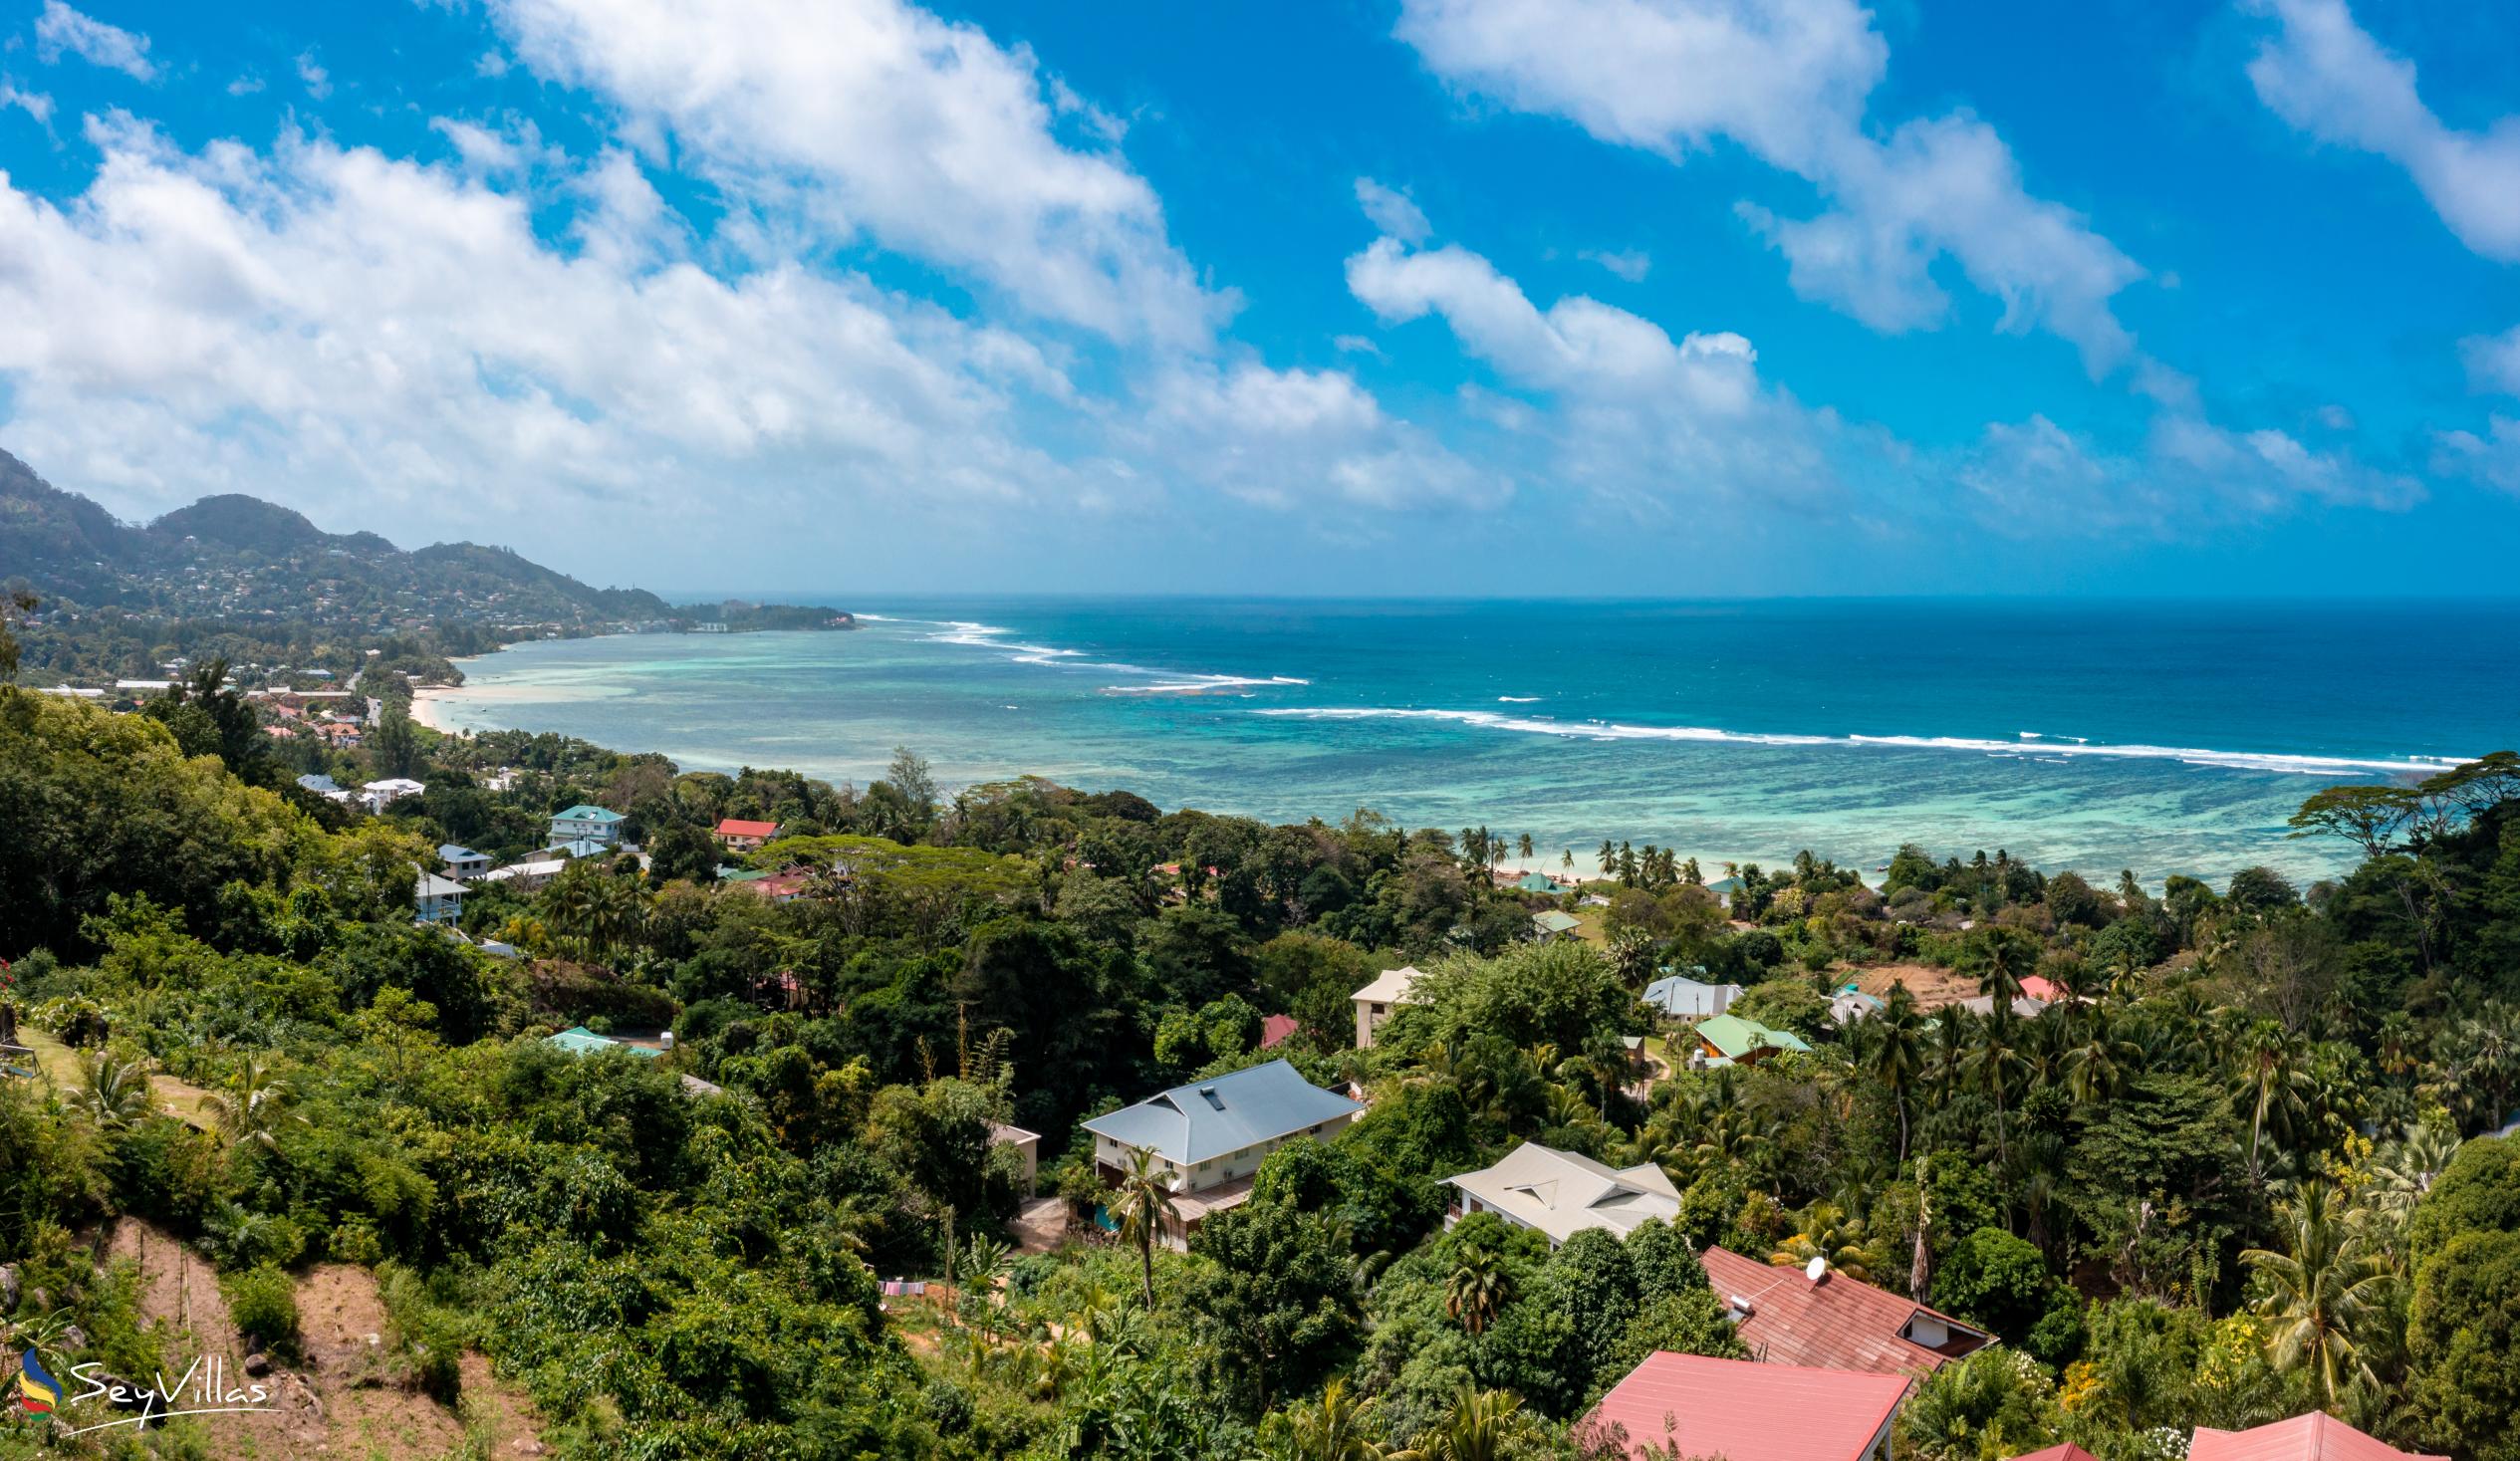 Photo 4: East Horizon - Outdoor area - Mahé (Seychelles)